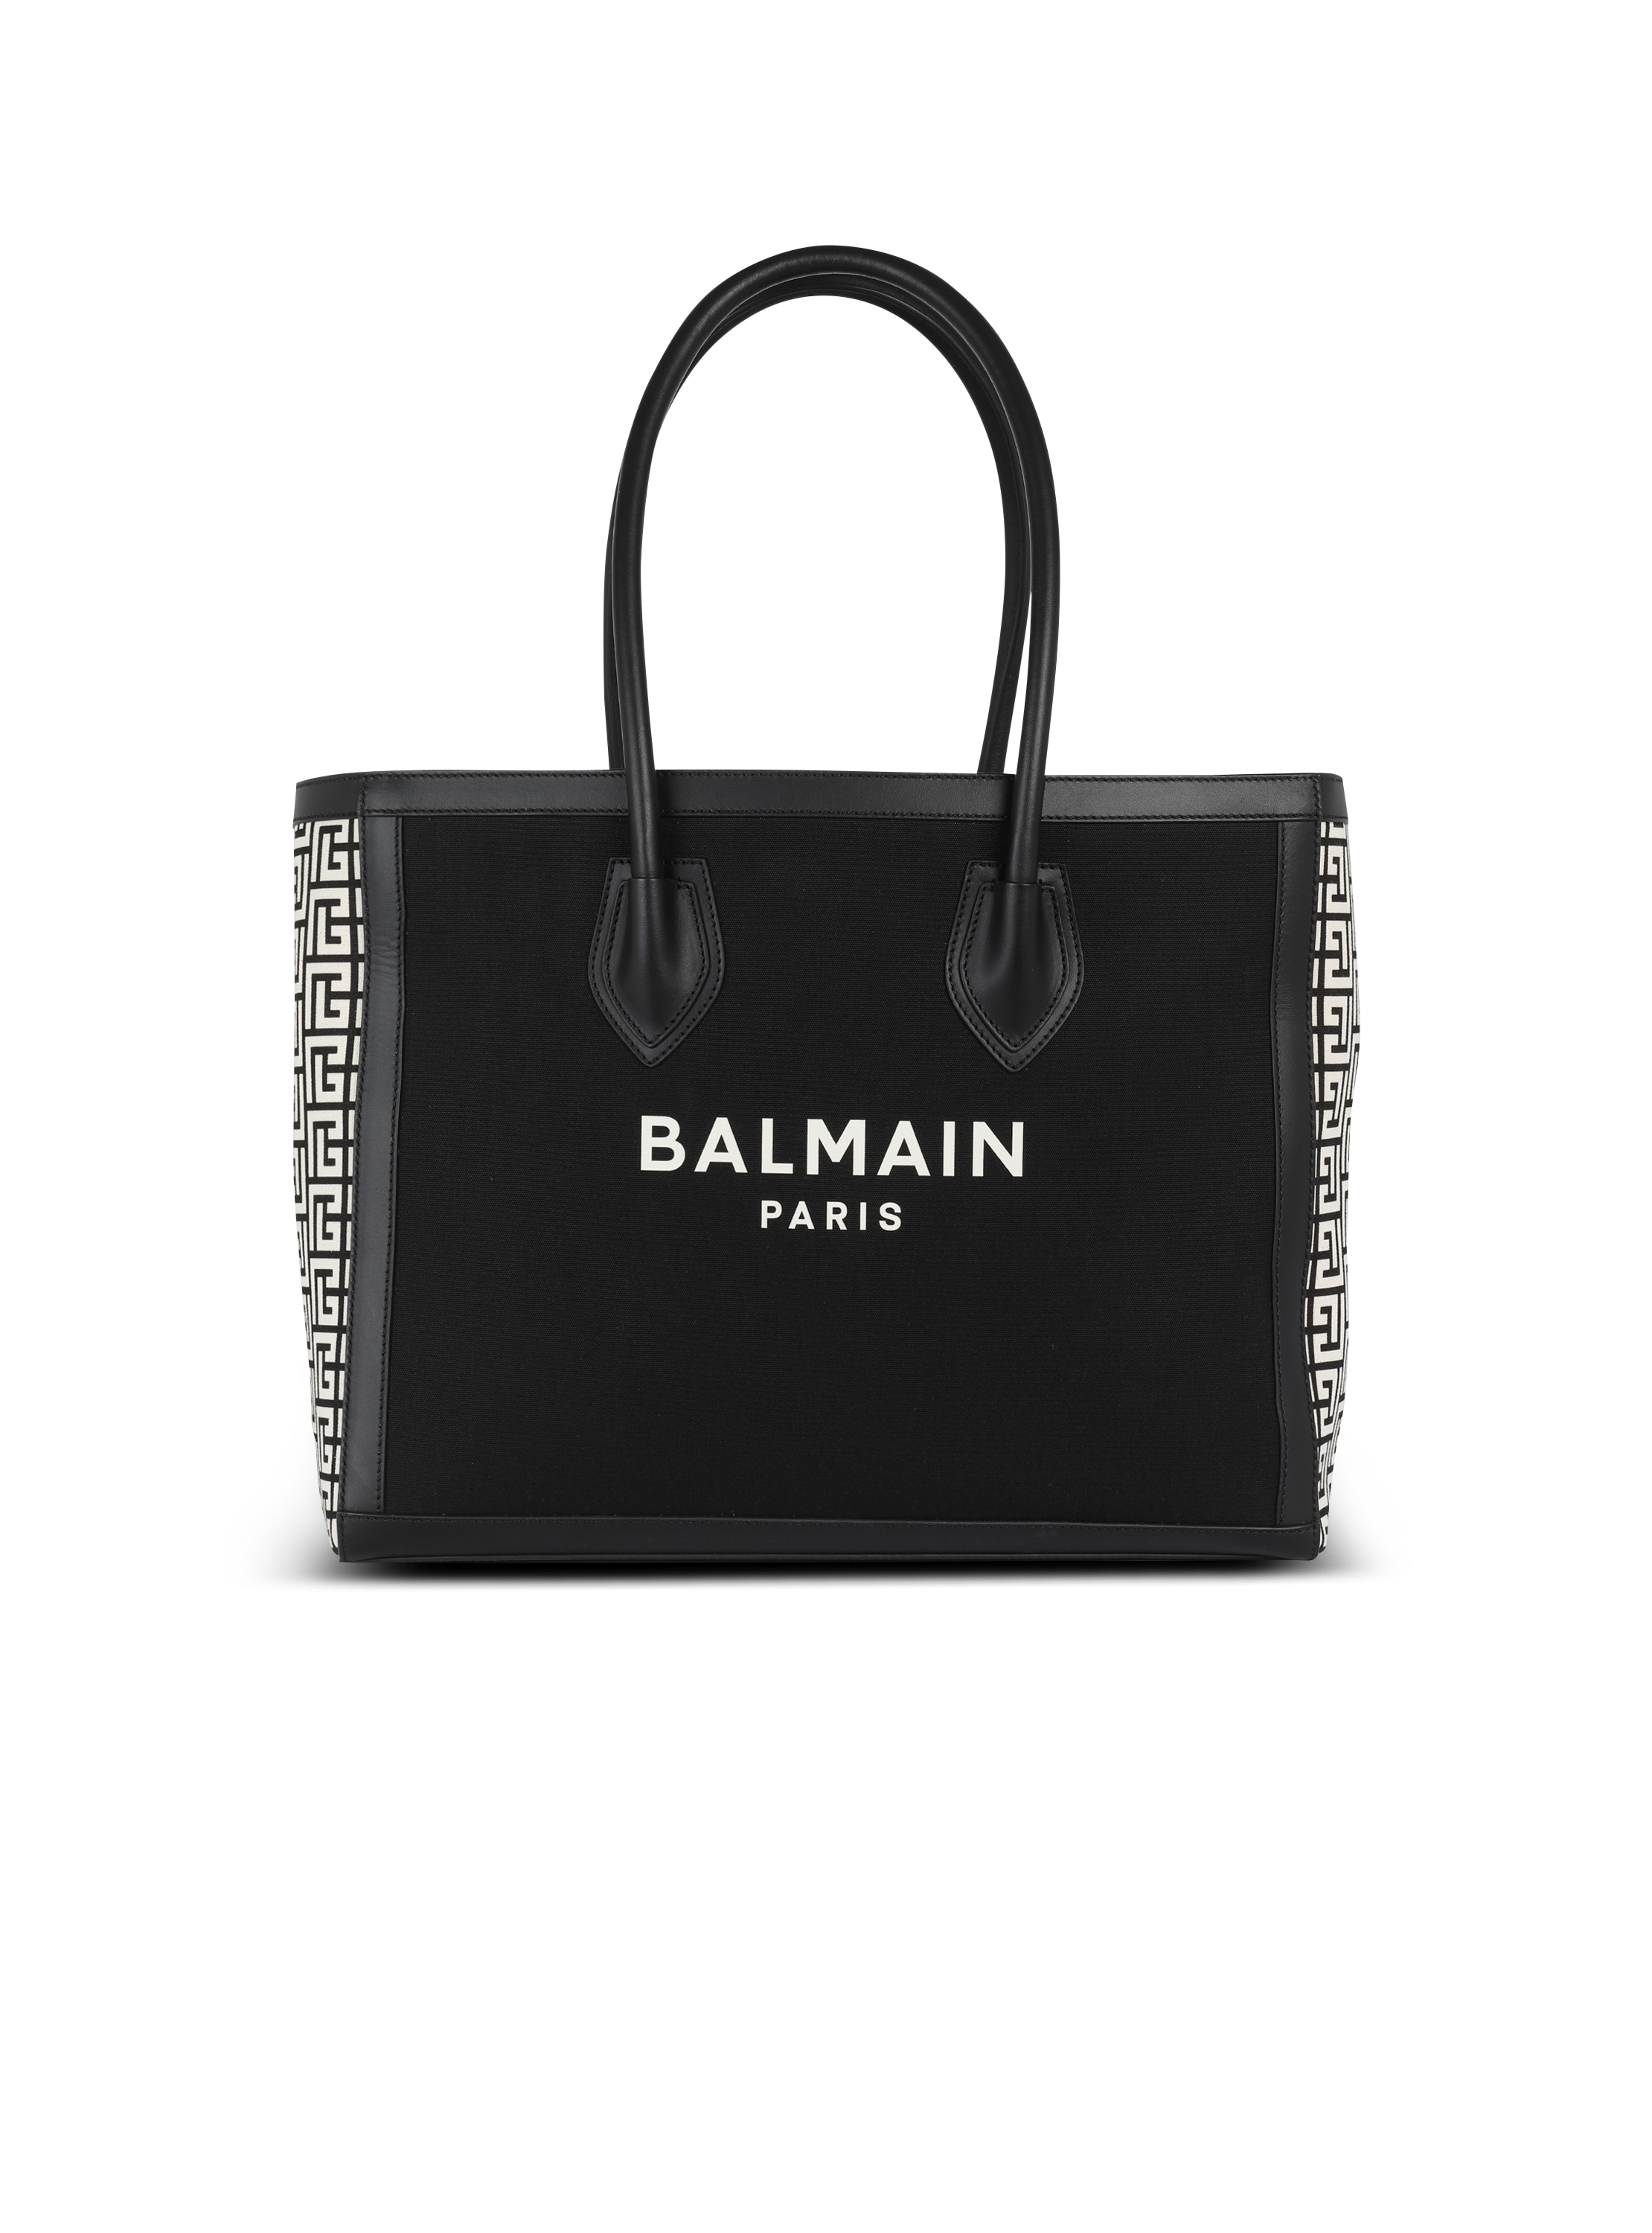 Balmain Cotton Printed Handbags in Black/Ivory - Save 56% Womens Tote bags Balmain Tote bags Black 